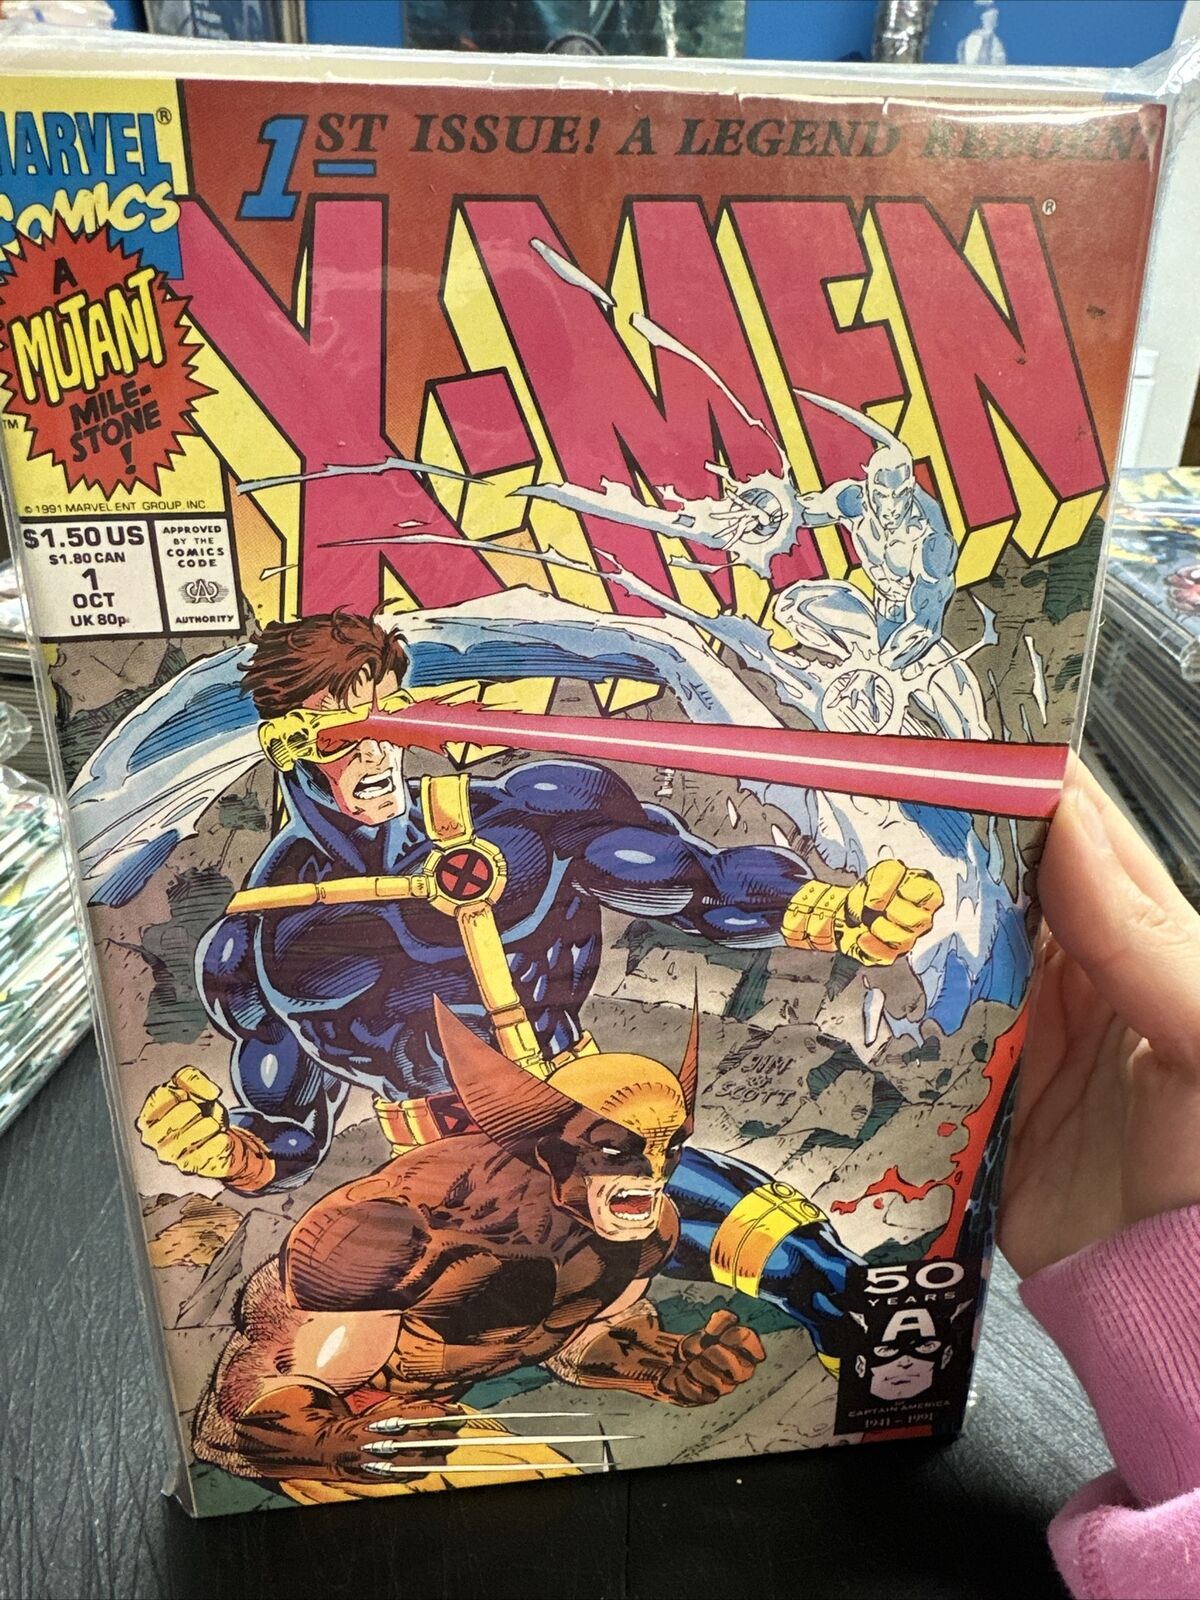 X-Men #1 (Oct 1991, Marvel) Special cover variant Jim Lee art